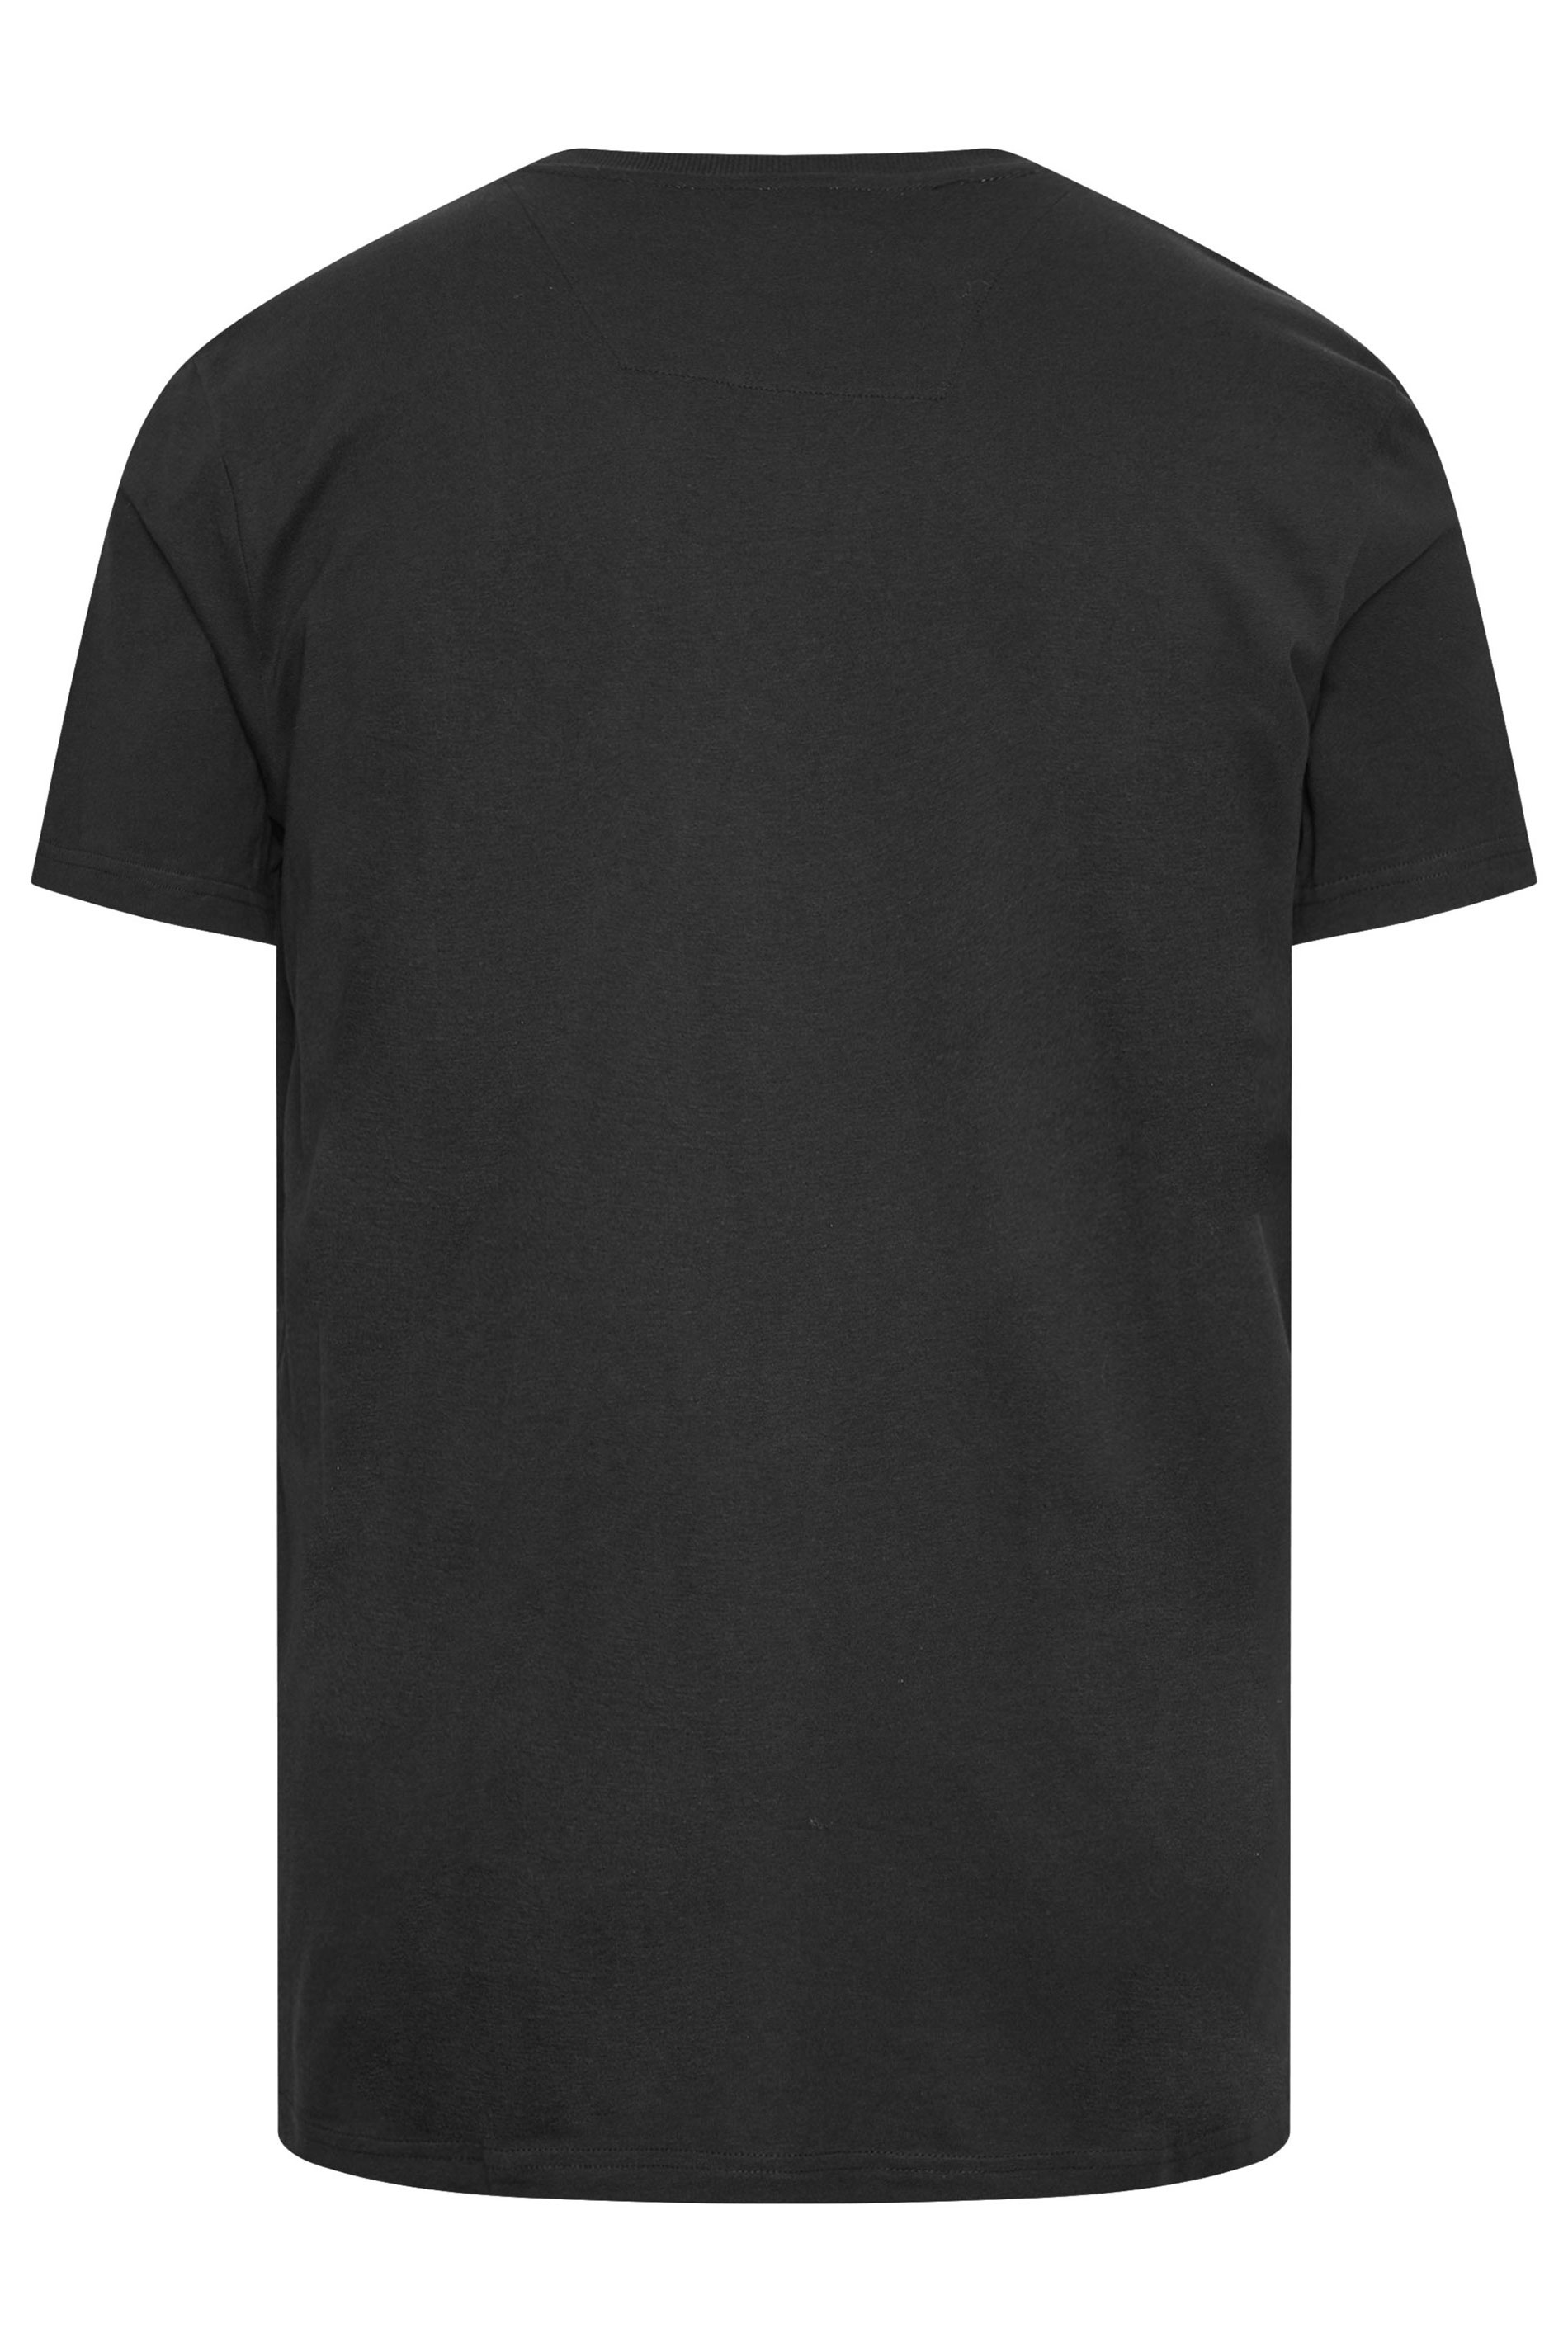 STUDIO A Black Patch Pocket T-Shirt 3